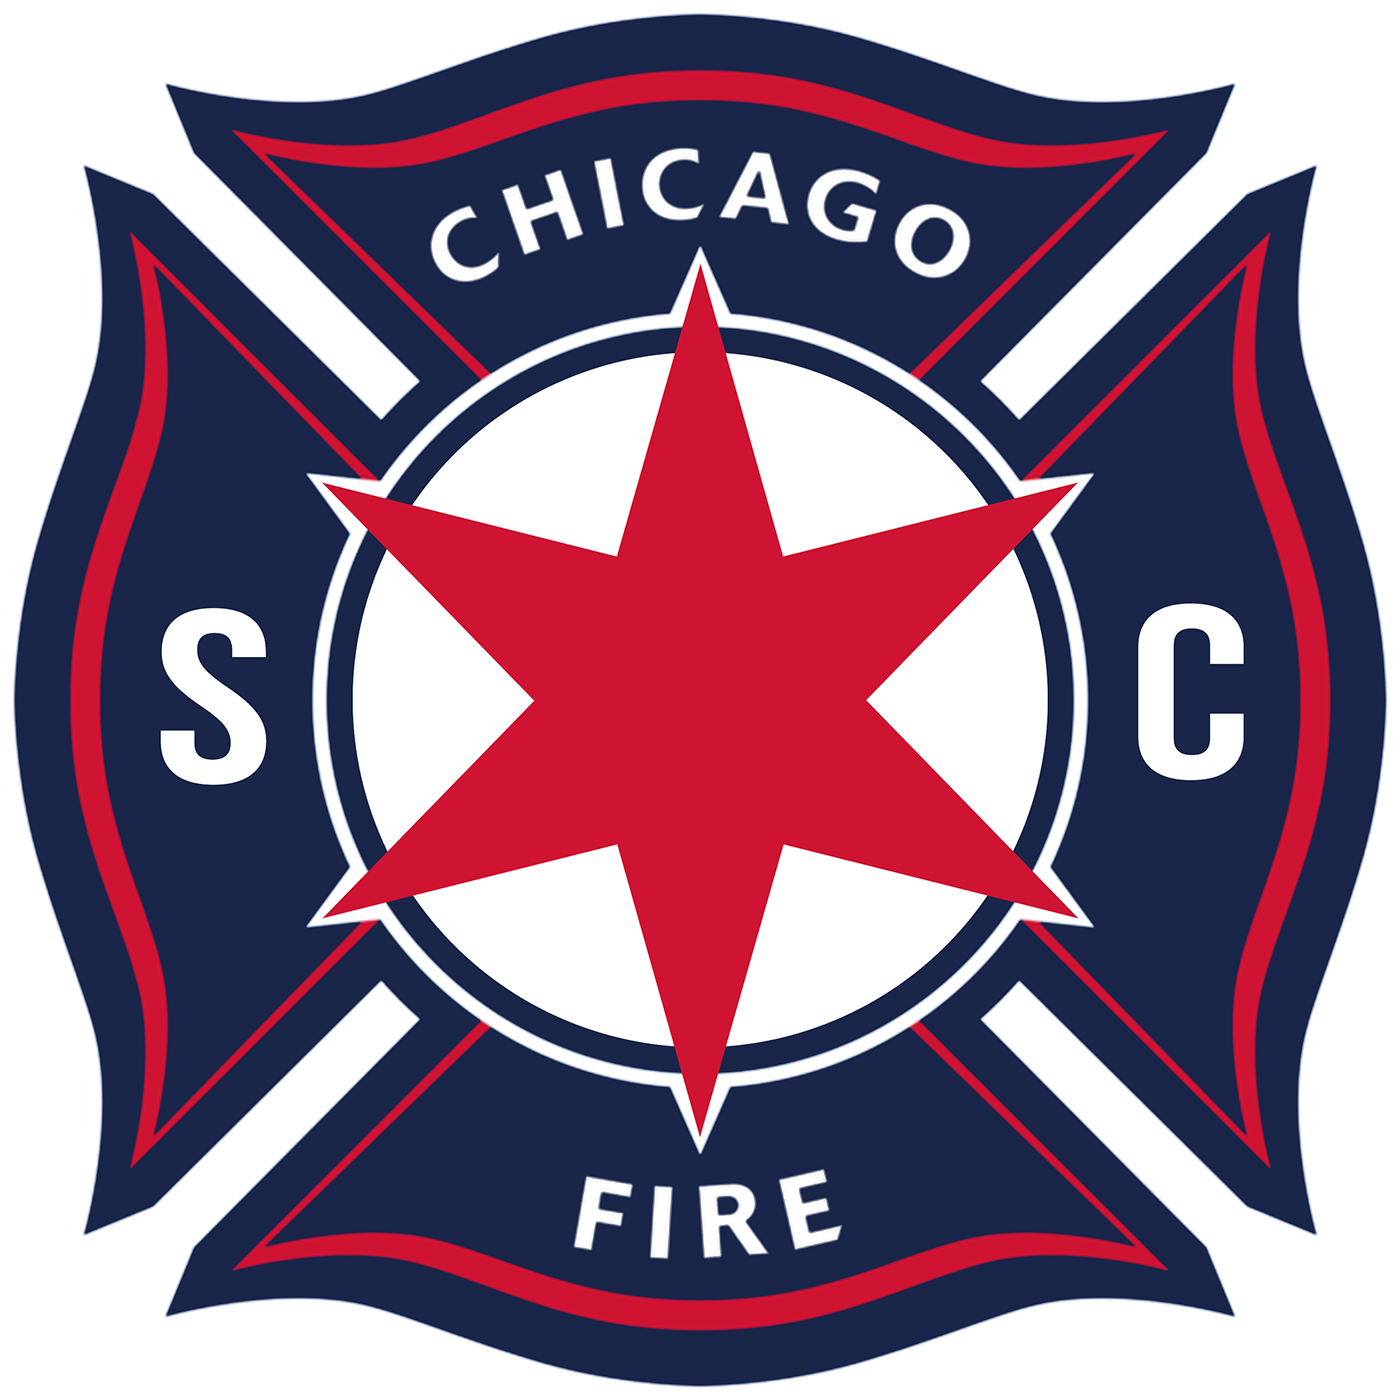 Chicago Fire Soccer Logo - Chicago Fire Redesign on Behance